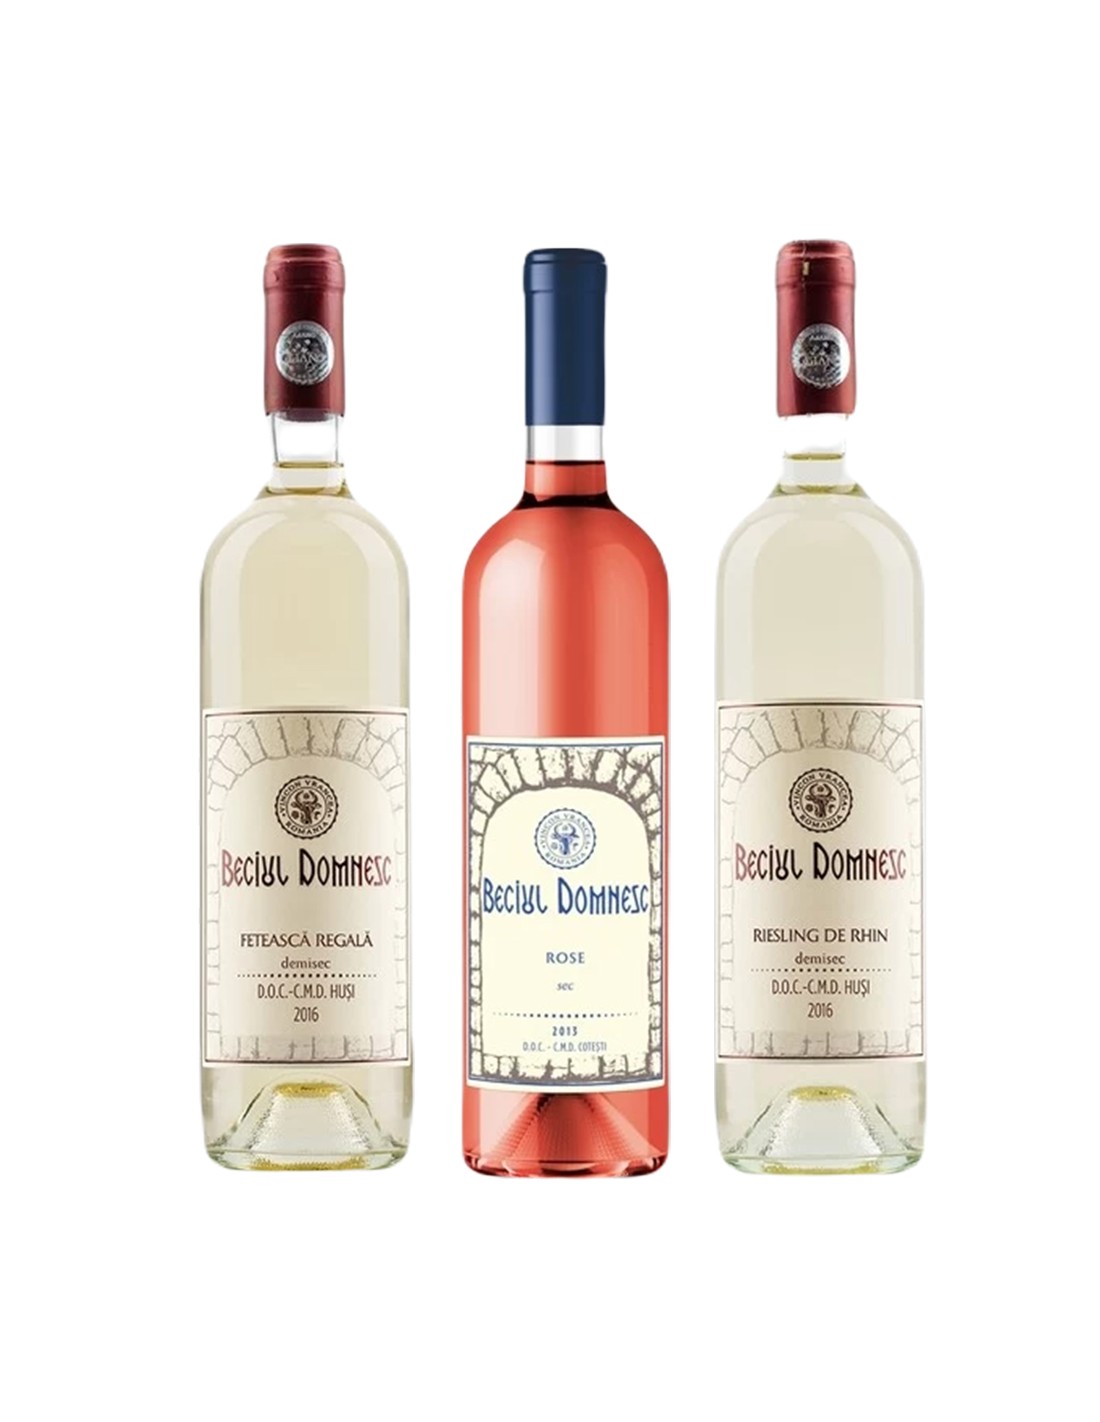 Pachet Beciul Domnesc Romanian Wine Selection alcooldiscount.ro